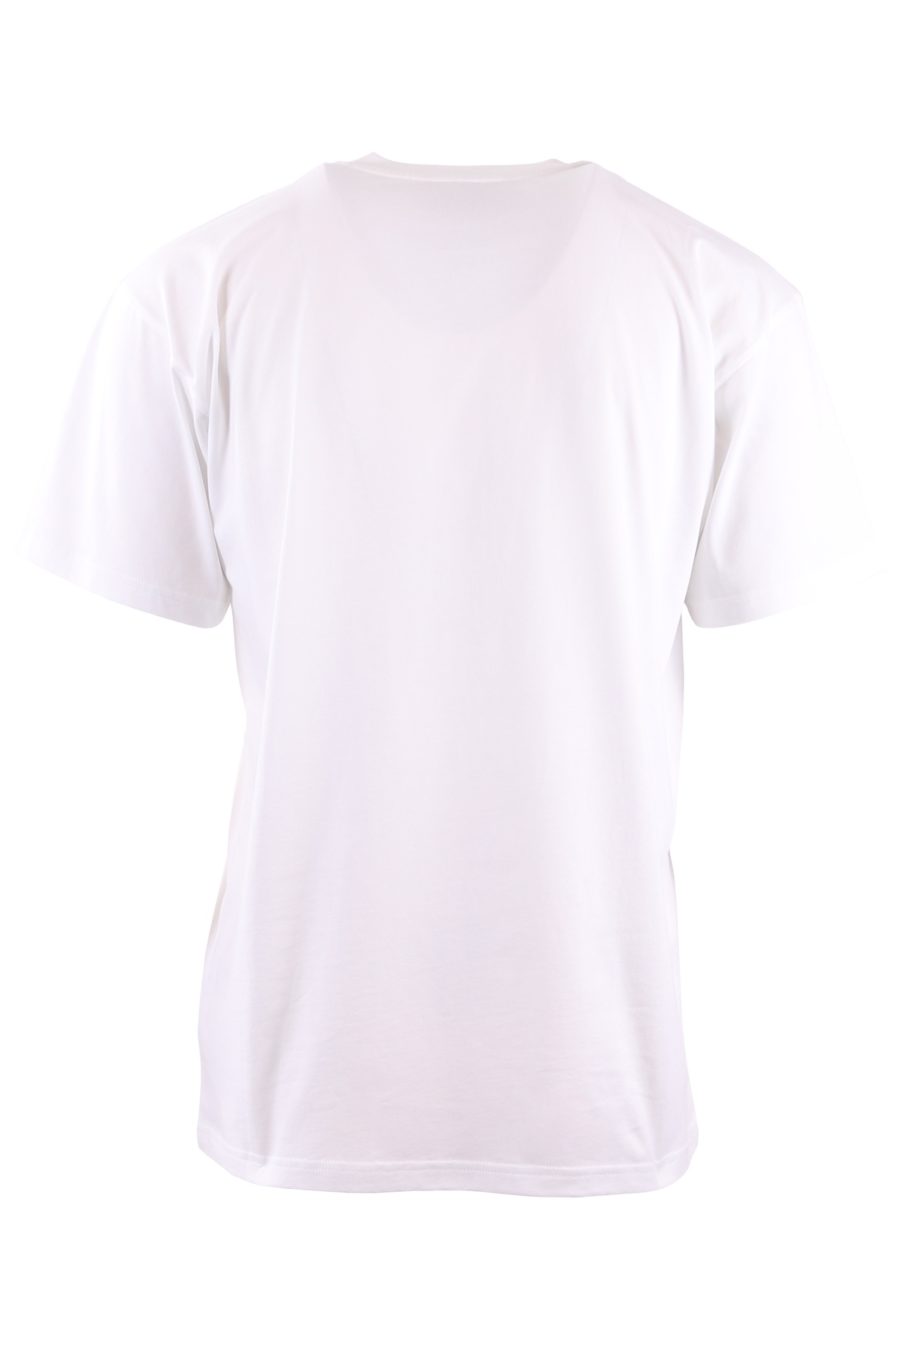 Moschino Couture übergroßes weißes T-Shirt mit großem Bär - 6c7718be4979da96f15fad71e14a796f46c6ec47